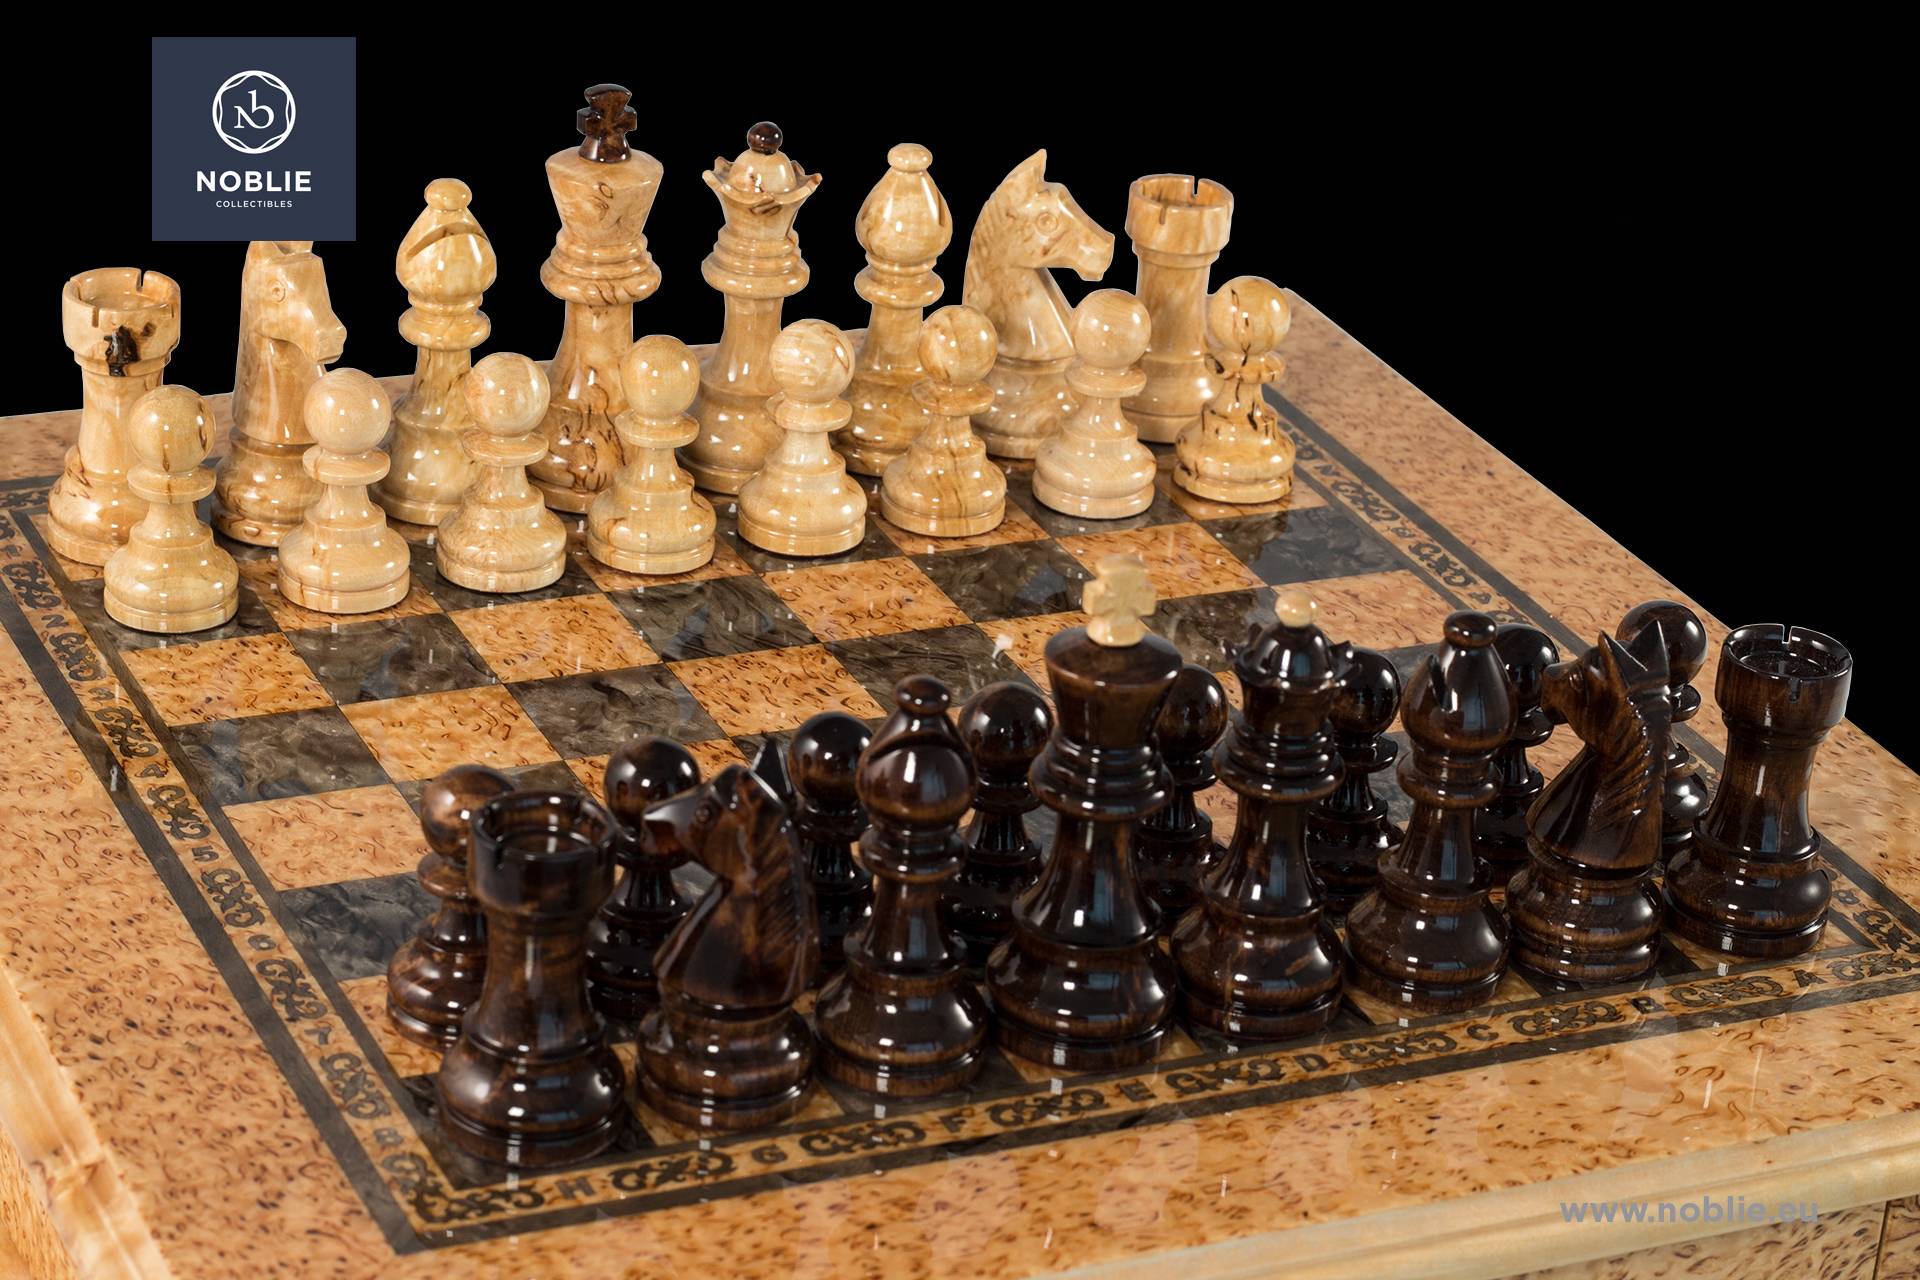 Özel ahşap satranç takımı "Konsept" - (Noblie) Çevrimiçi bıçak mağazası -  Noblie Collectibles